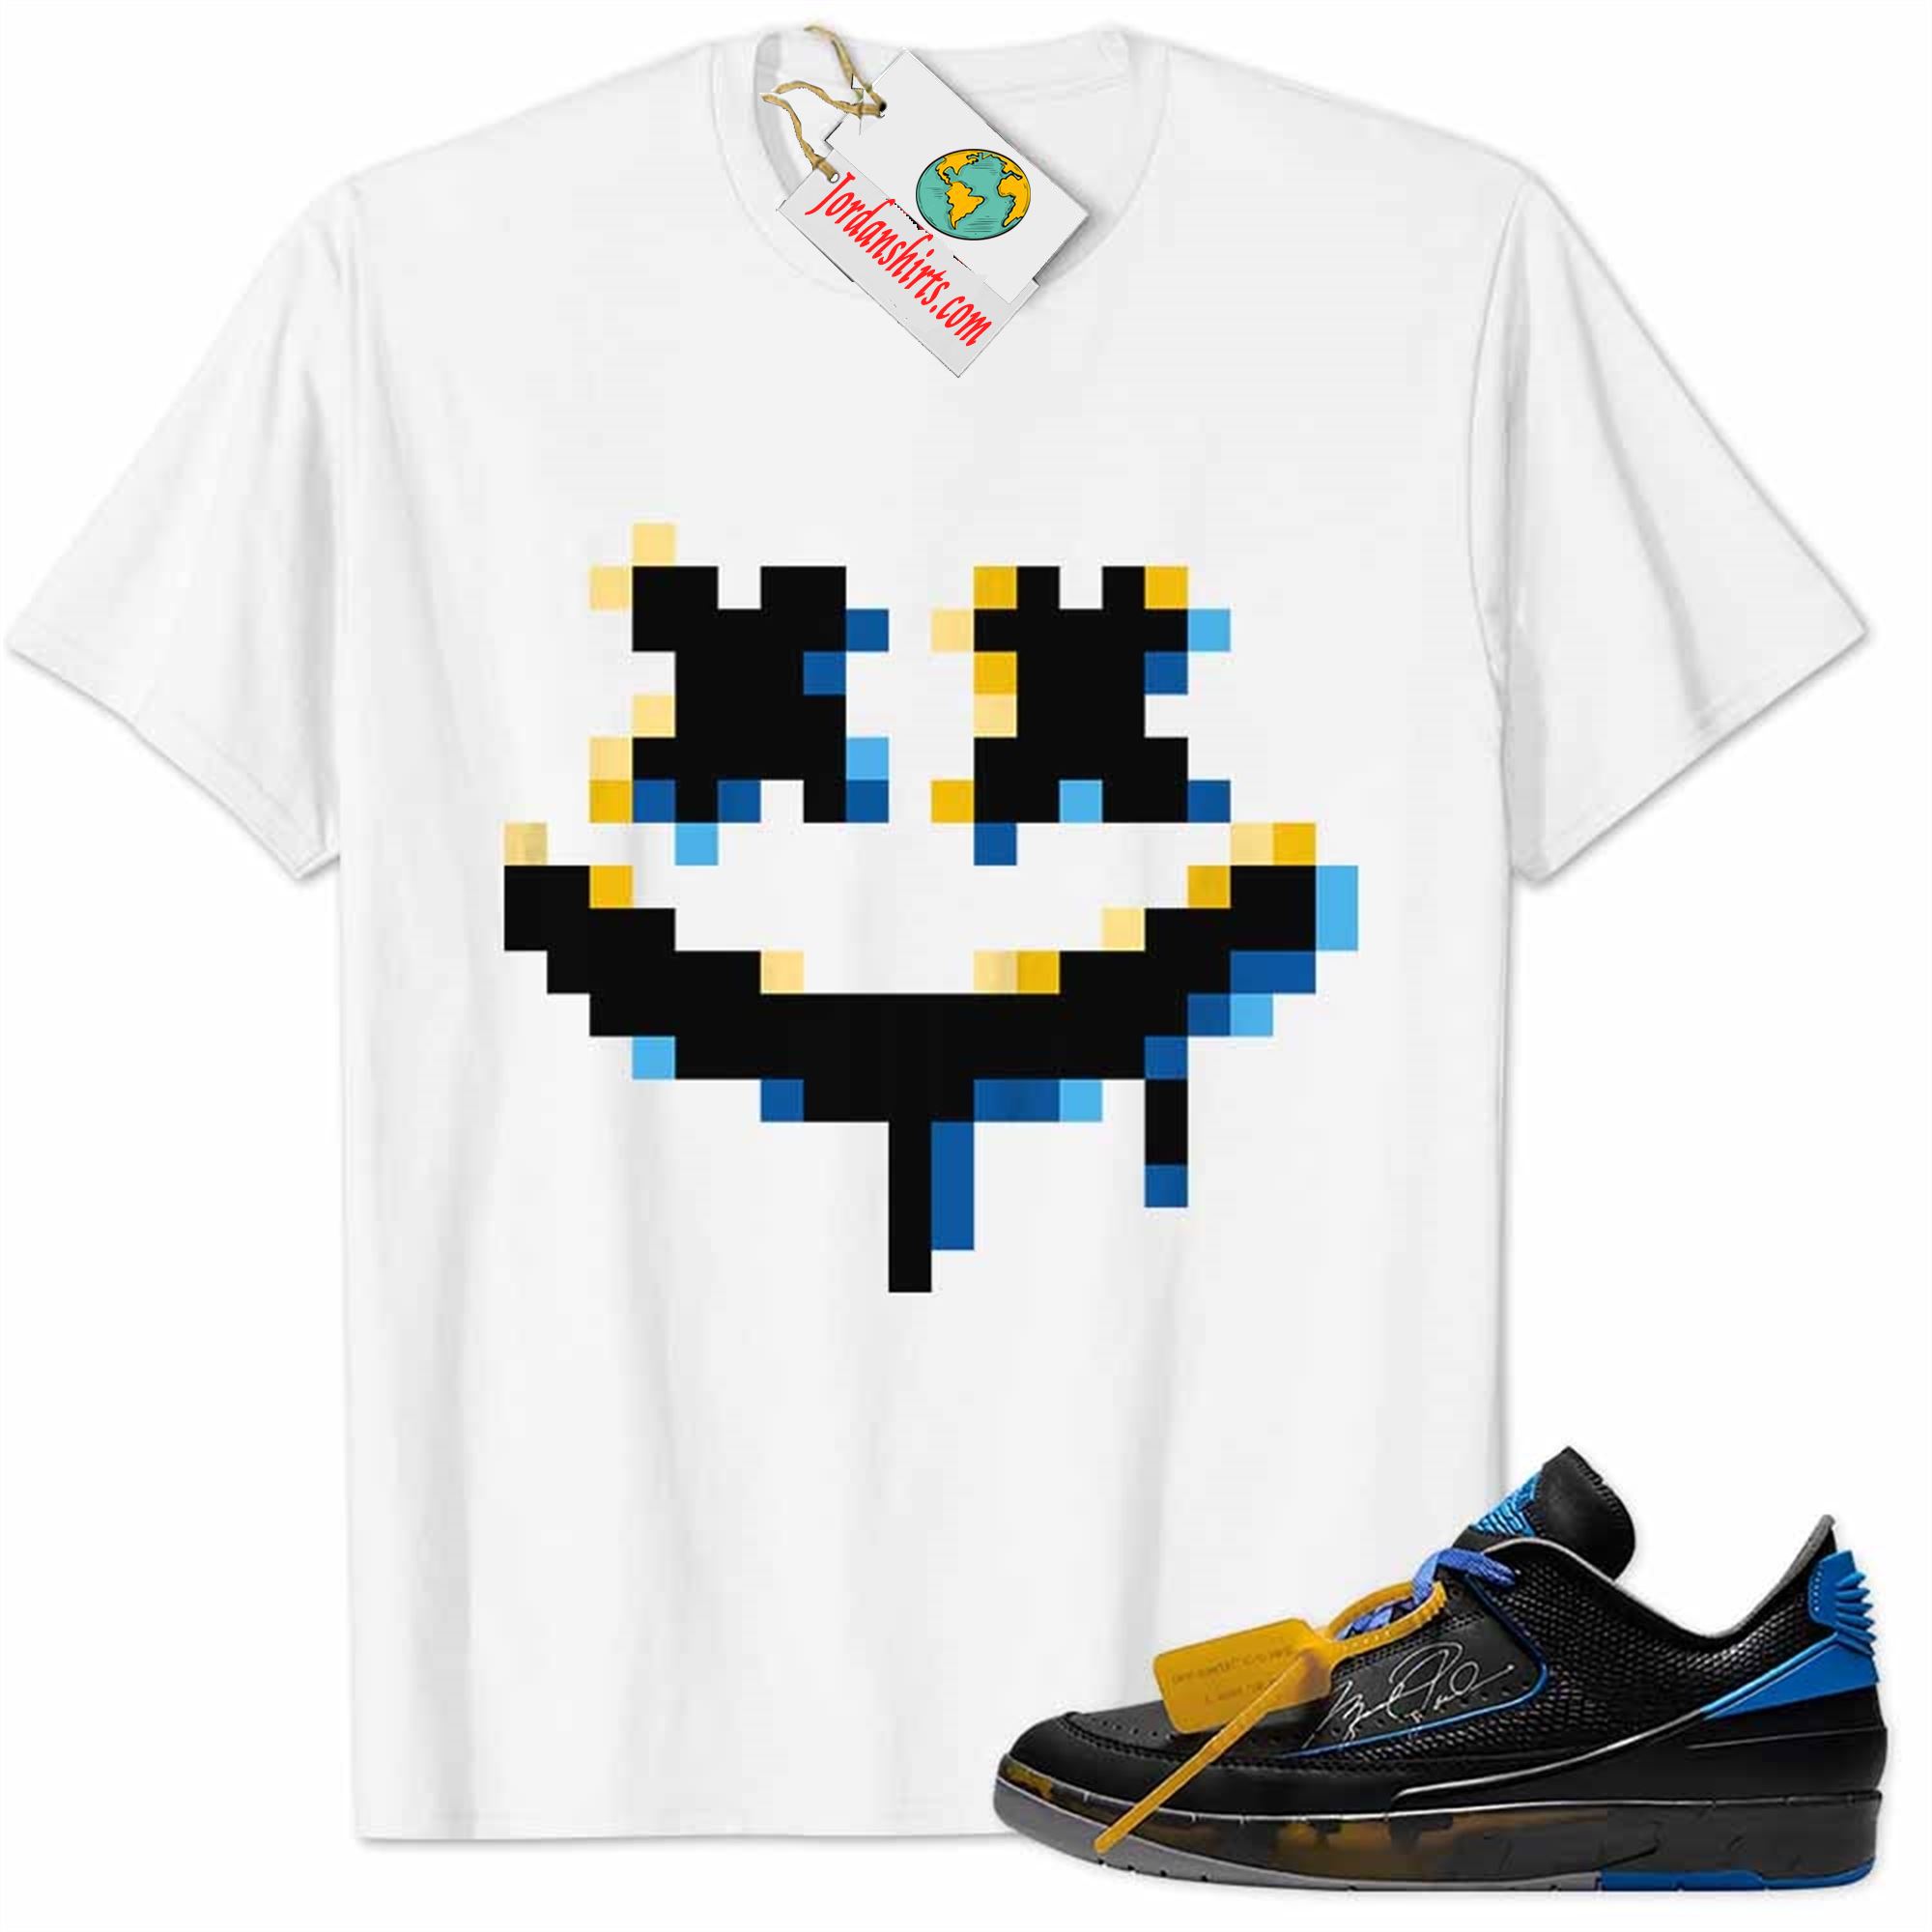 Jordan 2 Shirt, Smile Happy Face Pixel Art White Air Jordan 2 Low X Off-white Black And Varsity Royal 2s Size Up To 5xl